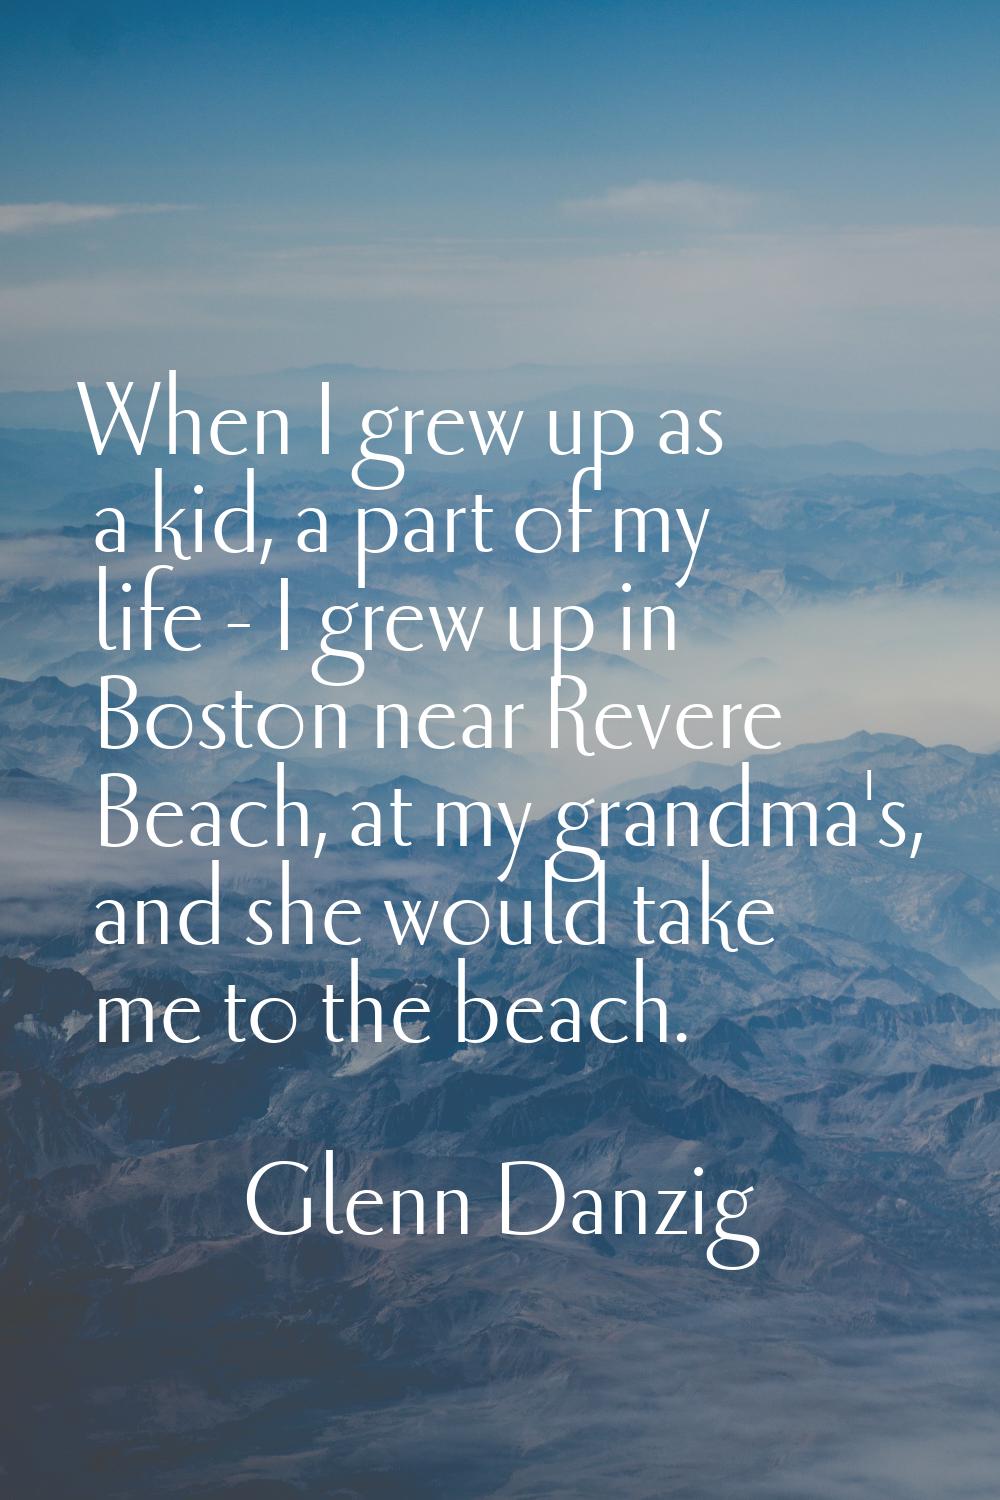 When I grew up as a kid, a part of my life - I grew up in Boston near Revere Beach, at my grandma's